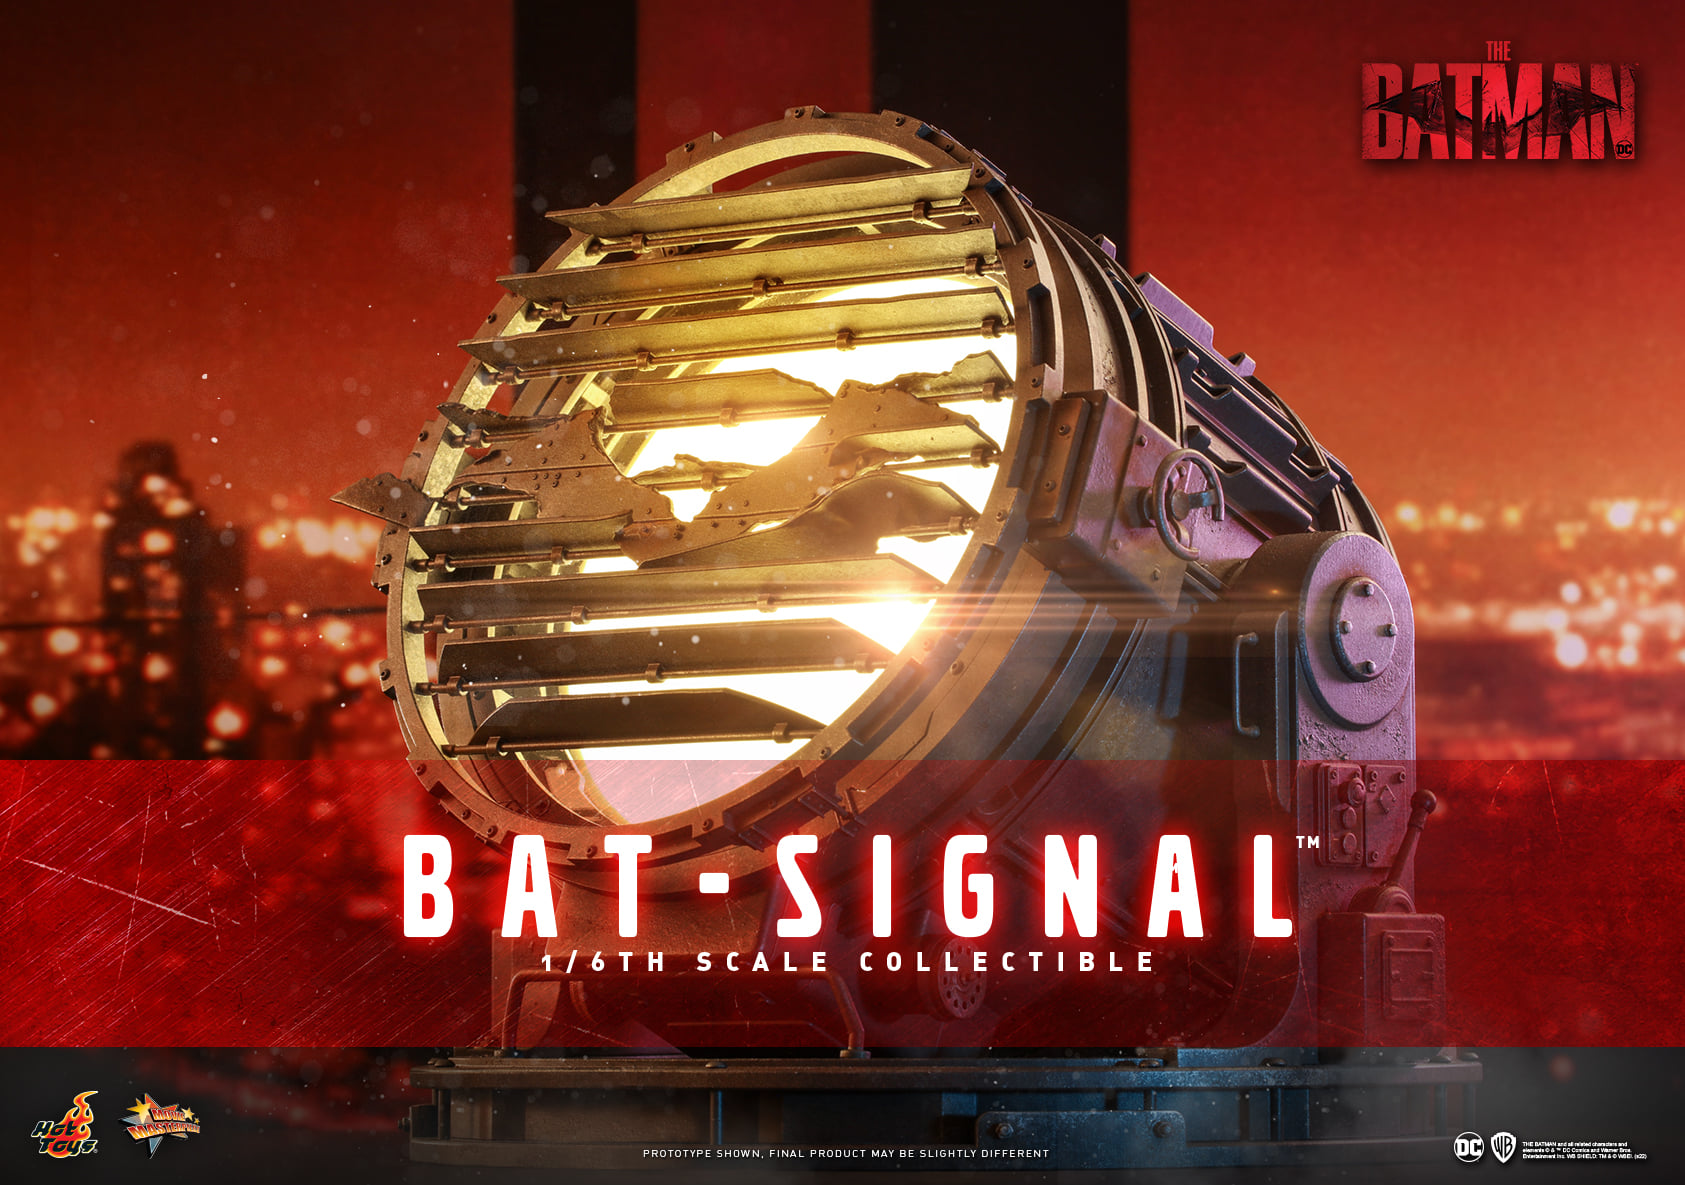 Hot Toys DC Comics The Batman Bat-Signal Sixth Scale Accessory MMS640